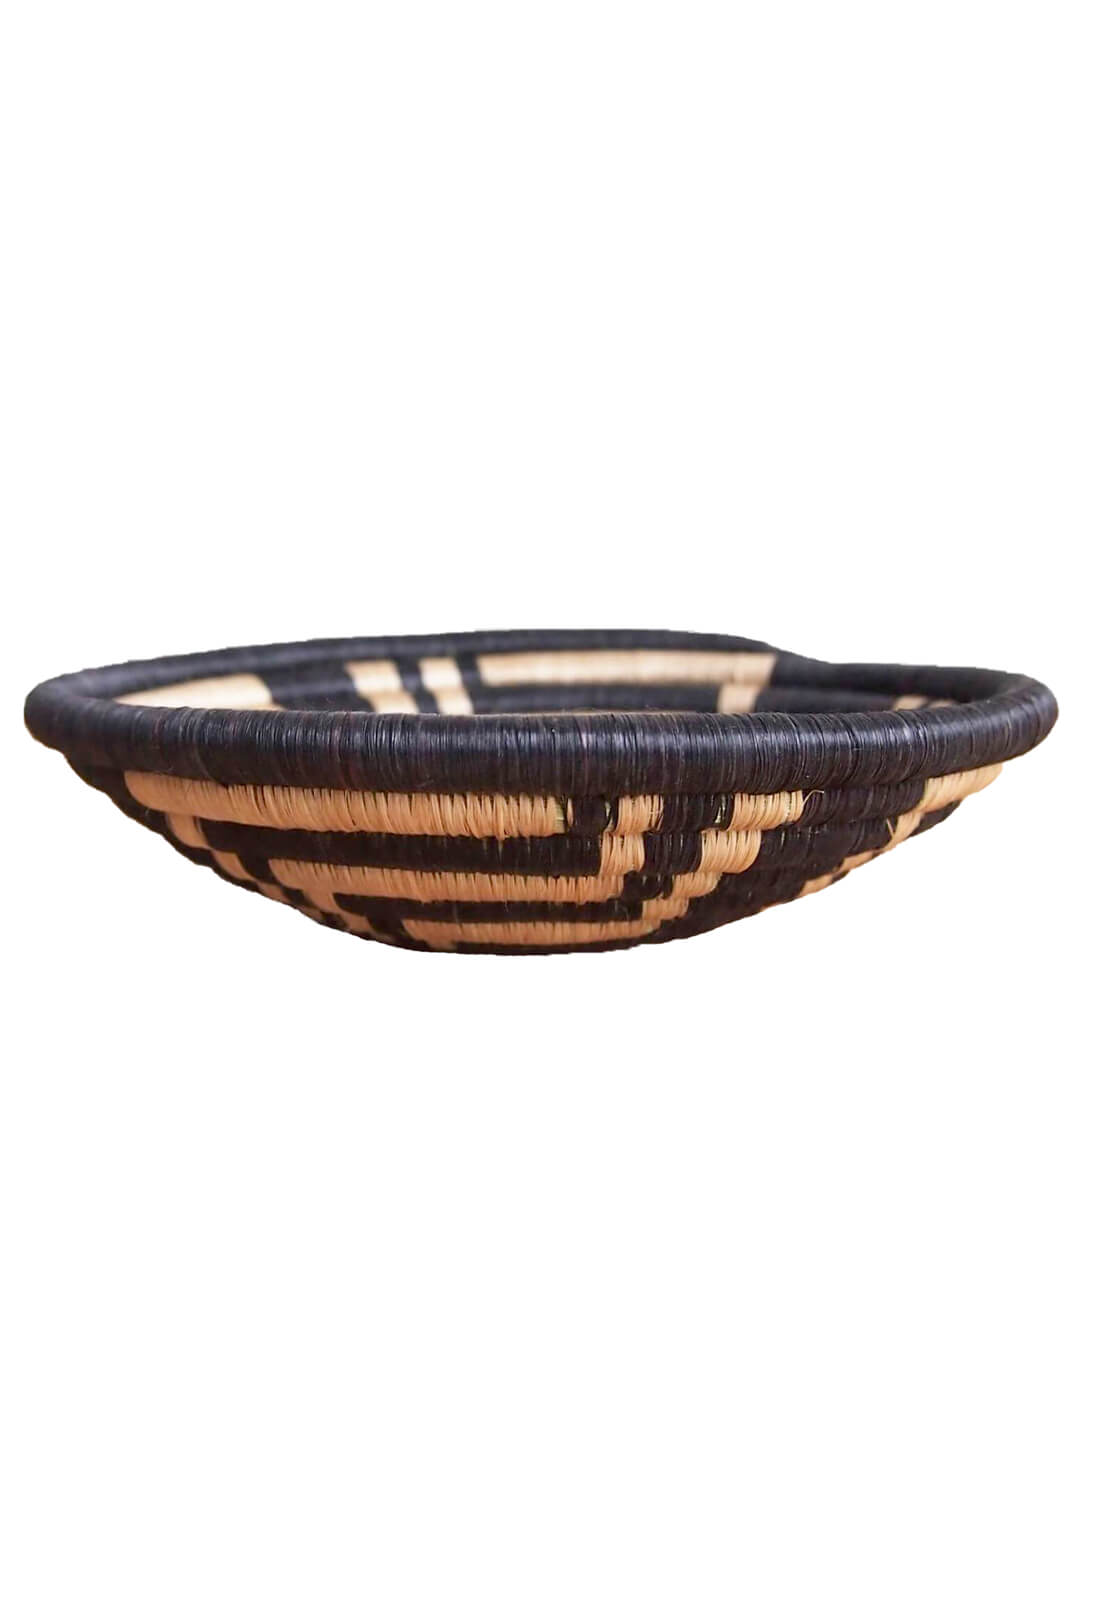 Hand Woven Musoma Basket - Black and Tan, Small